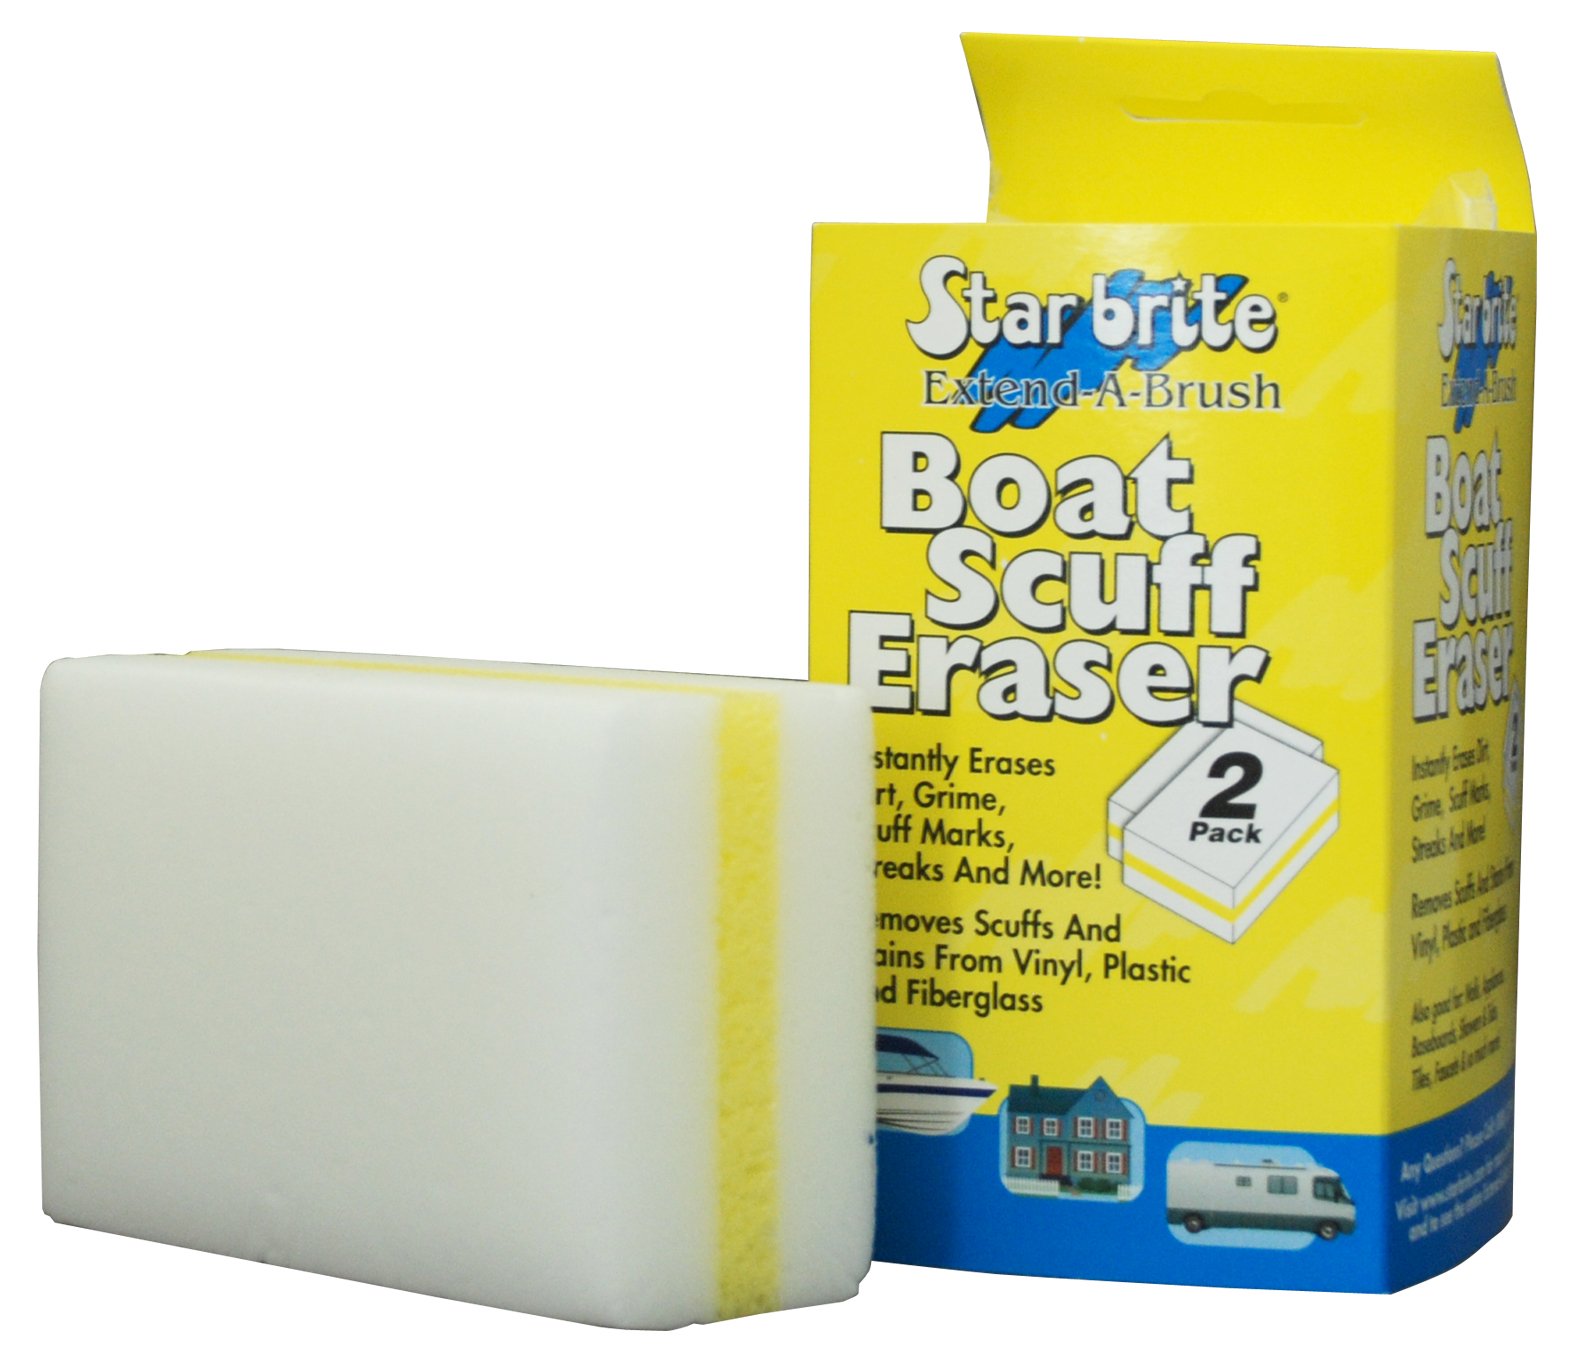 STAR BRITE Boaters Combo Set - Boat Brush, Boat Hook, Telescoping Handle, Boat Scuff Eraser 2 Pack & Giant Sponge